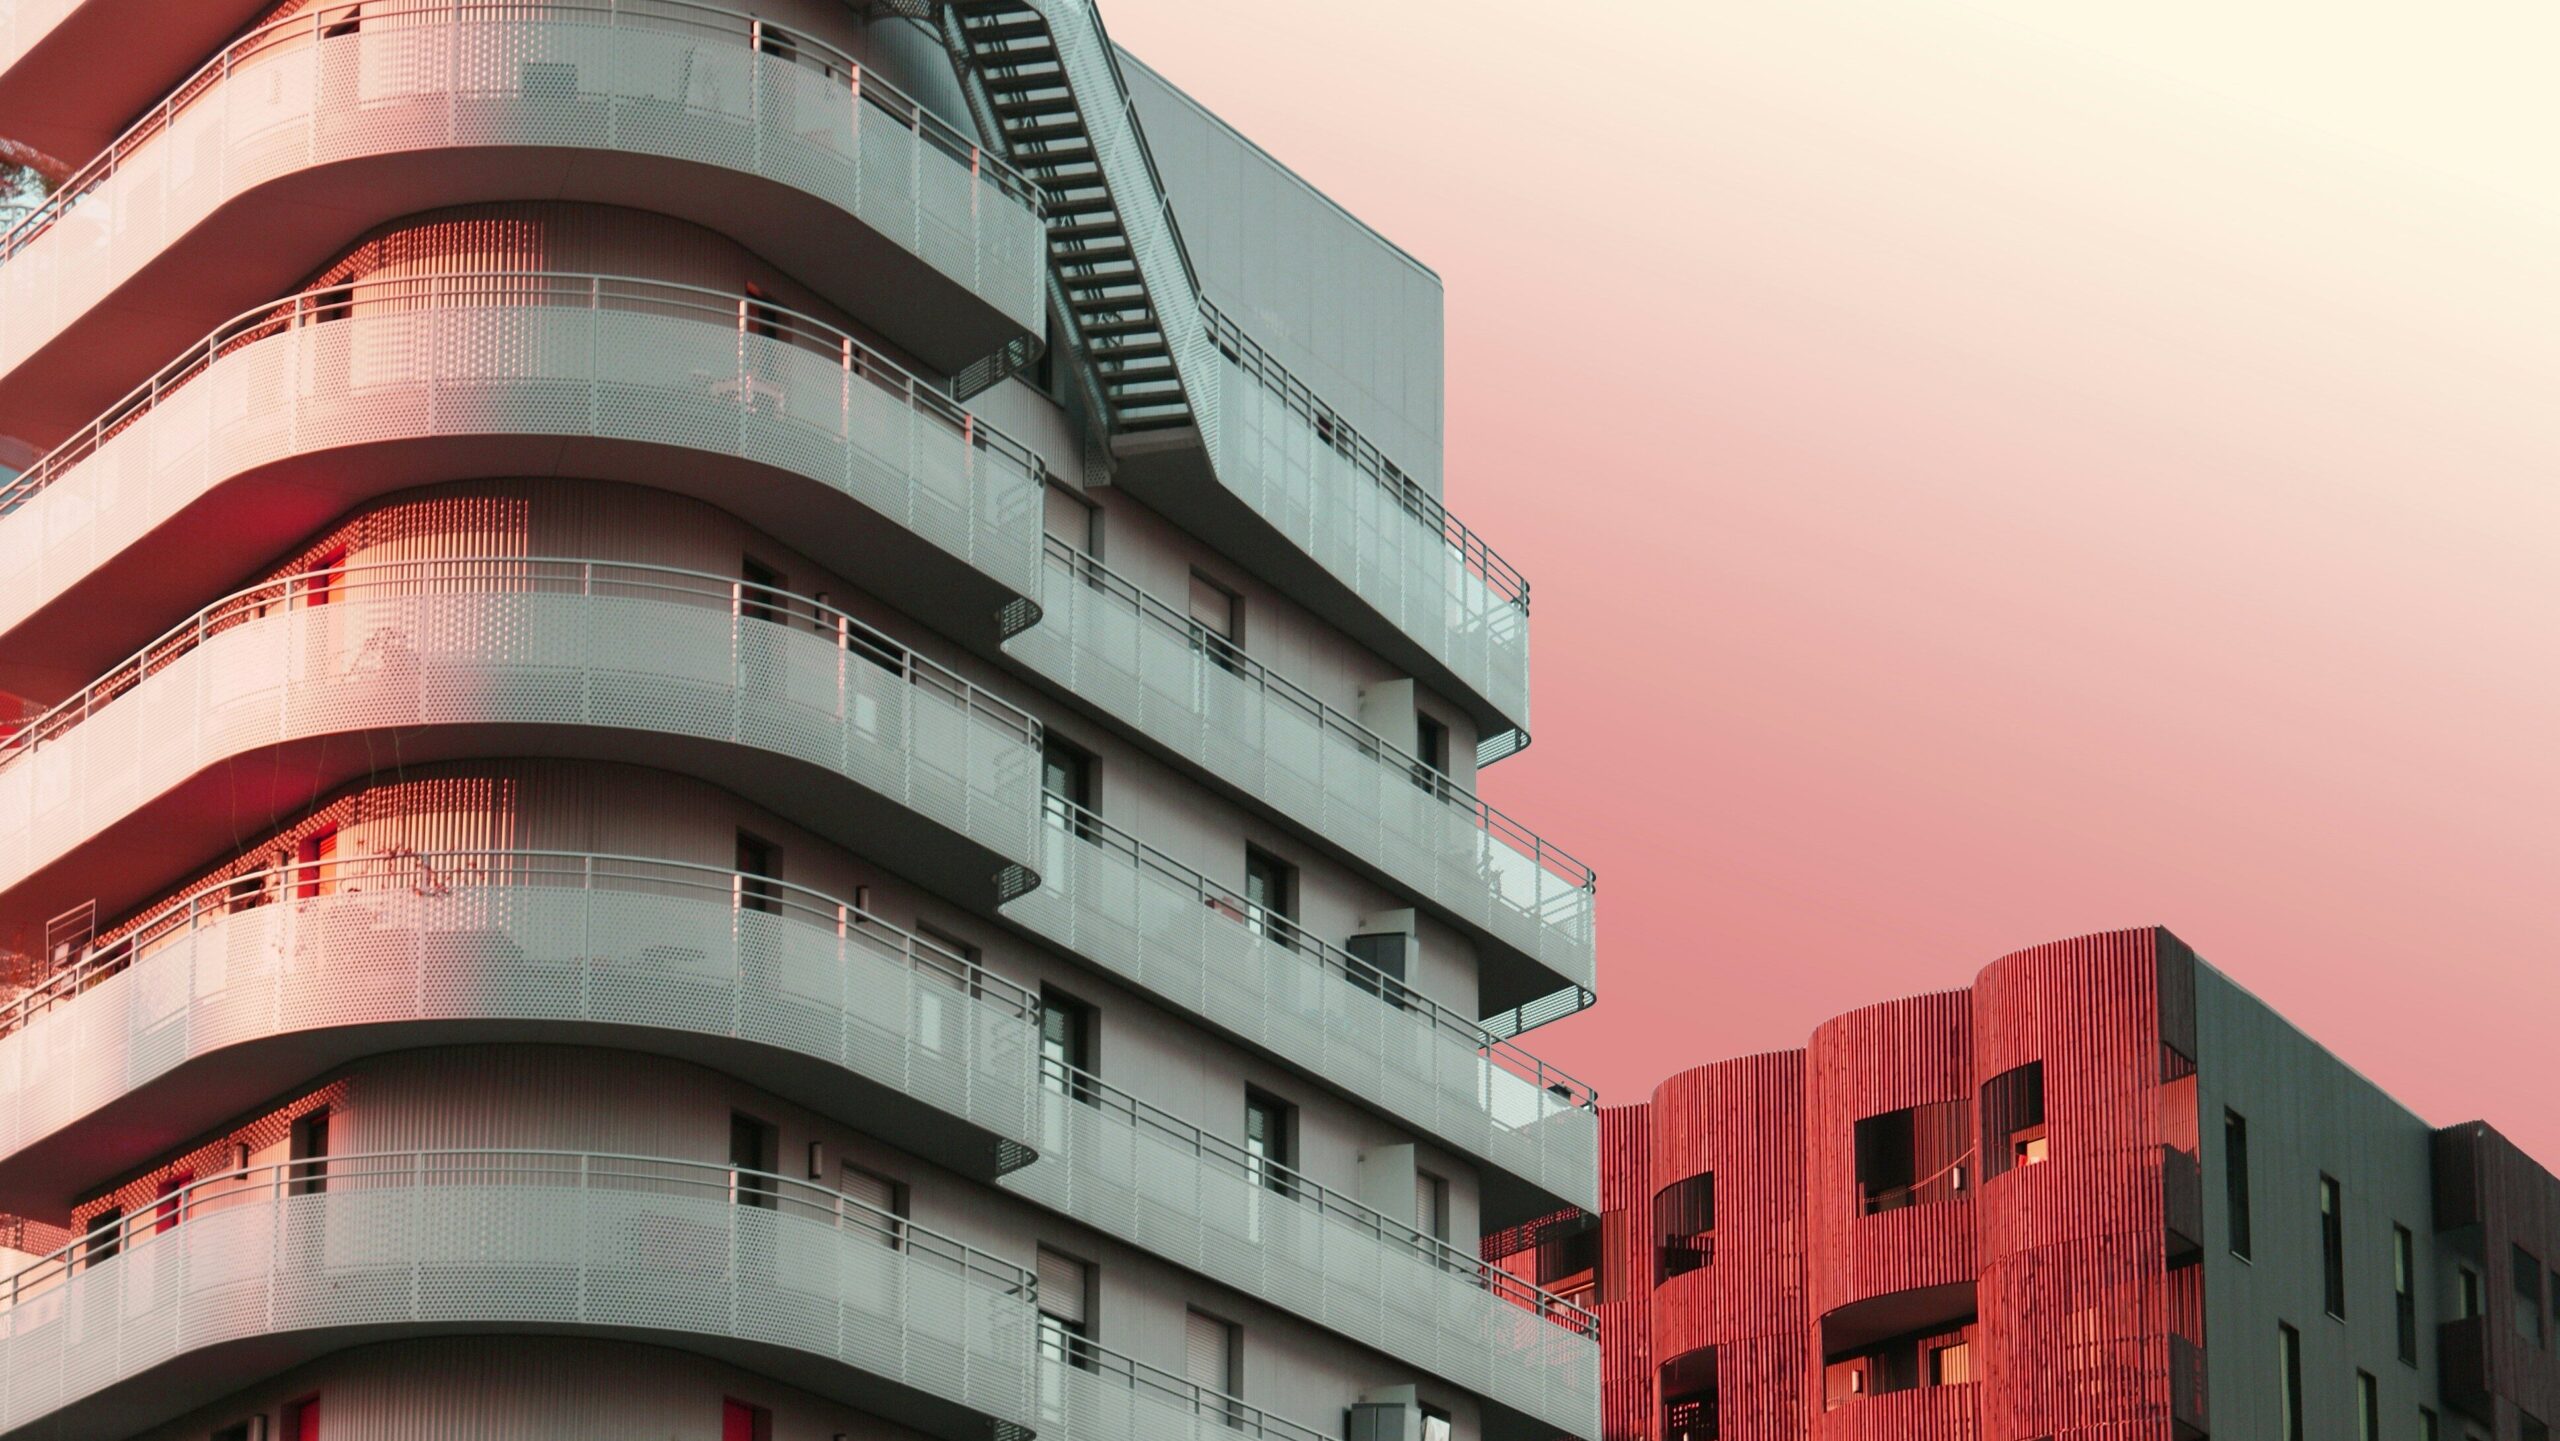 sfr property management condo buildings pink hue background